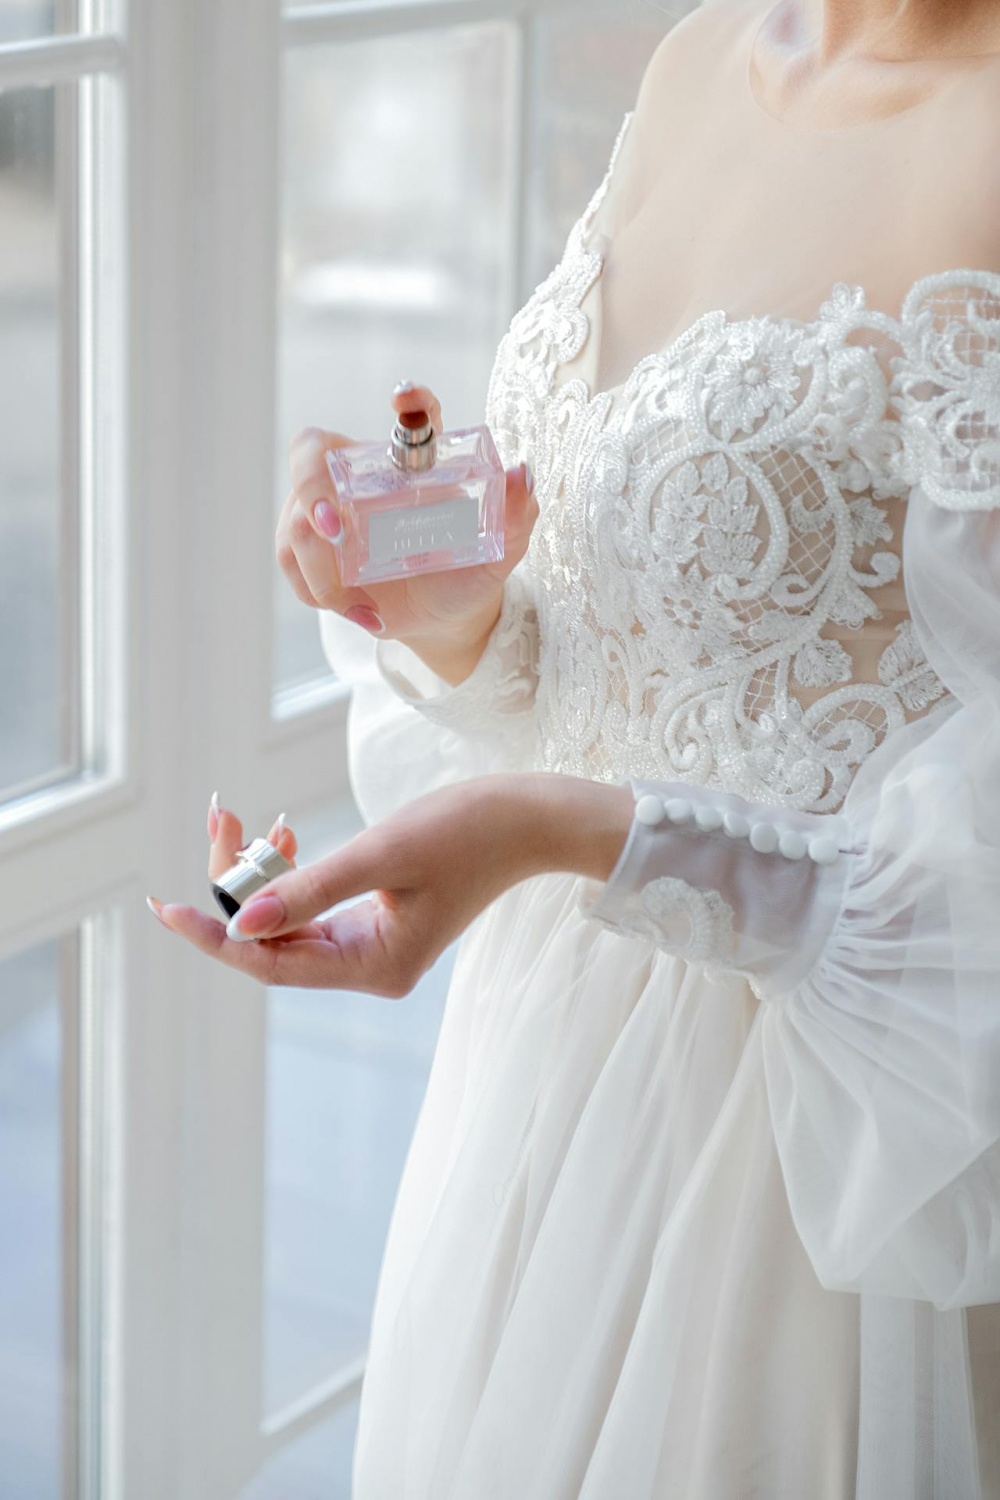 Top Wedding Season Fragrance Choices